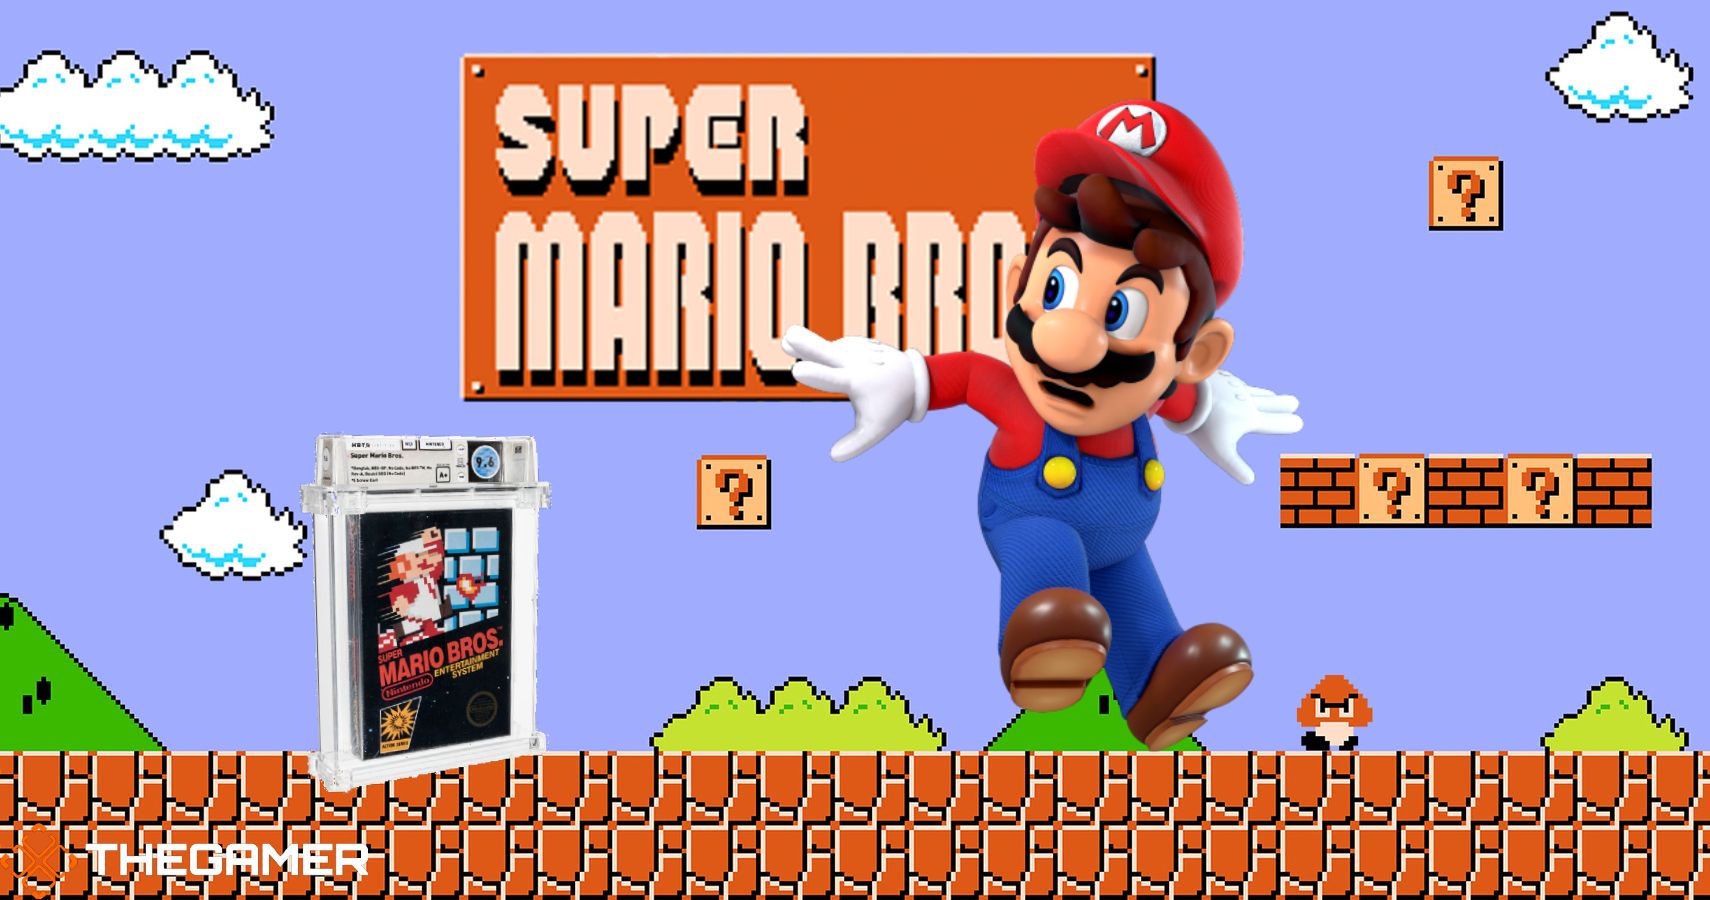 Mamma Mia! Vintage Super Mario Bros Cartridge Sells For $660000